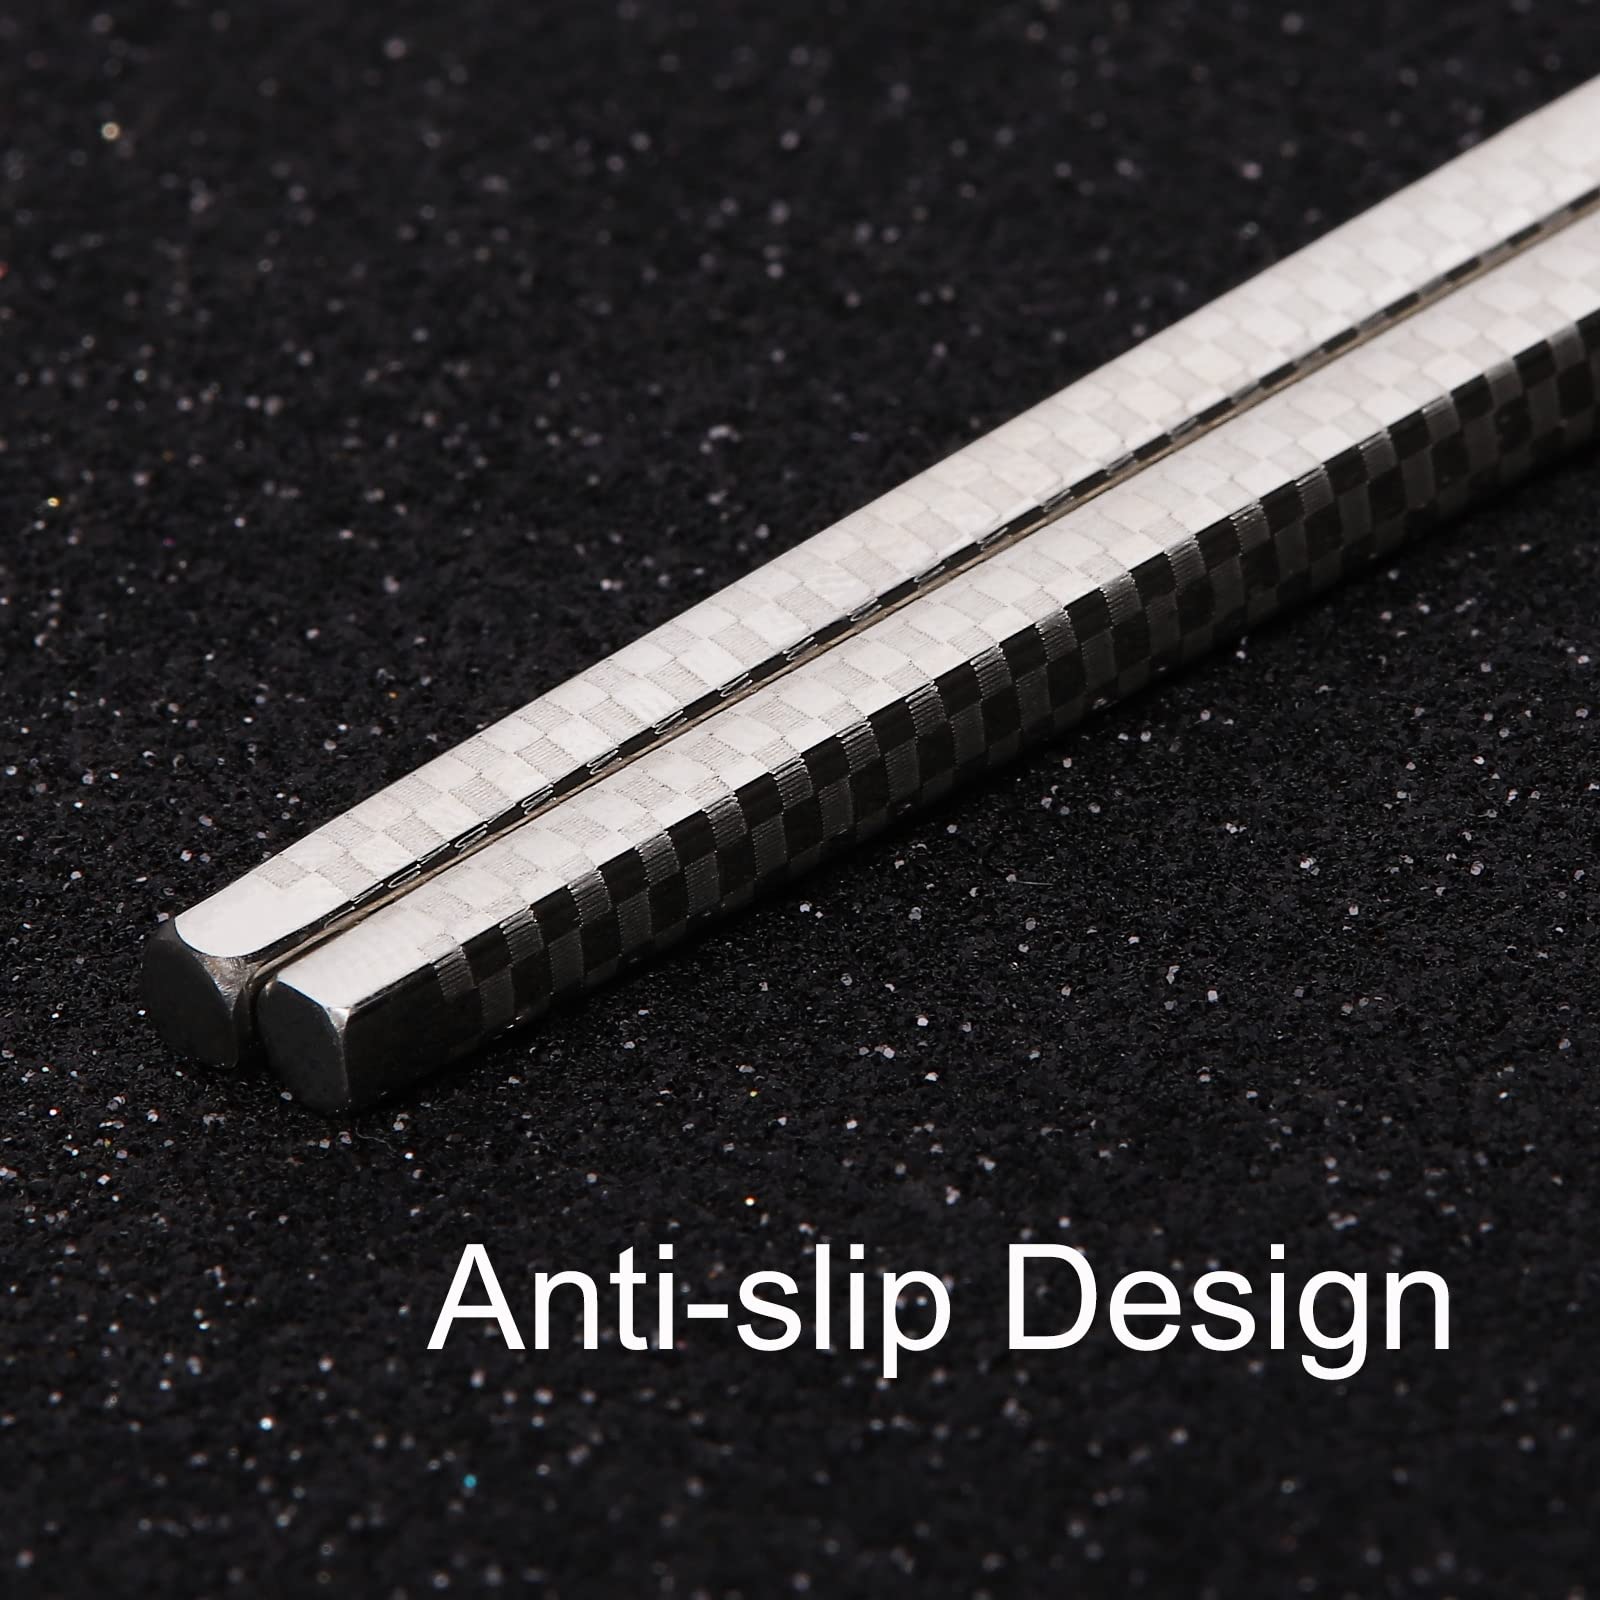 Stainless Steel 18/8 Chopsticks Reusable Titanium Plated Metal Chopsticks Premium Japanese Gift Set Dishwasher Safe (1 pair - Black)